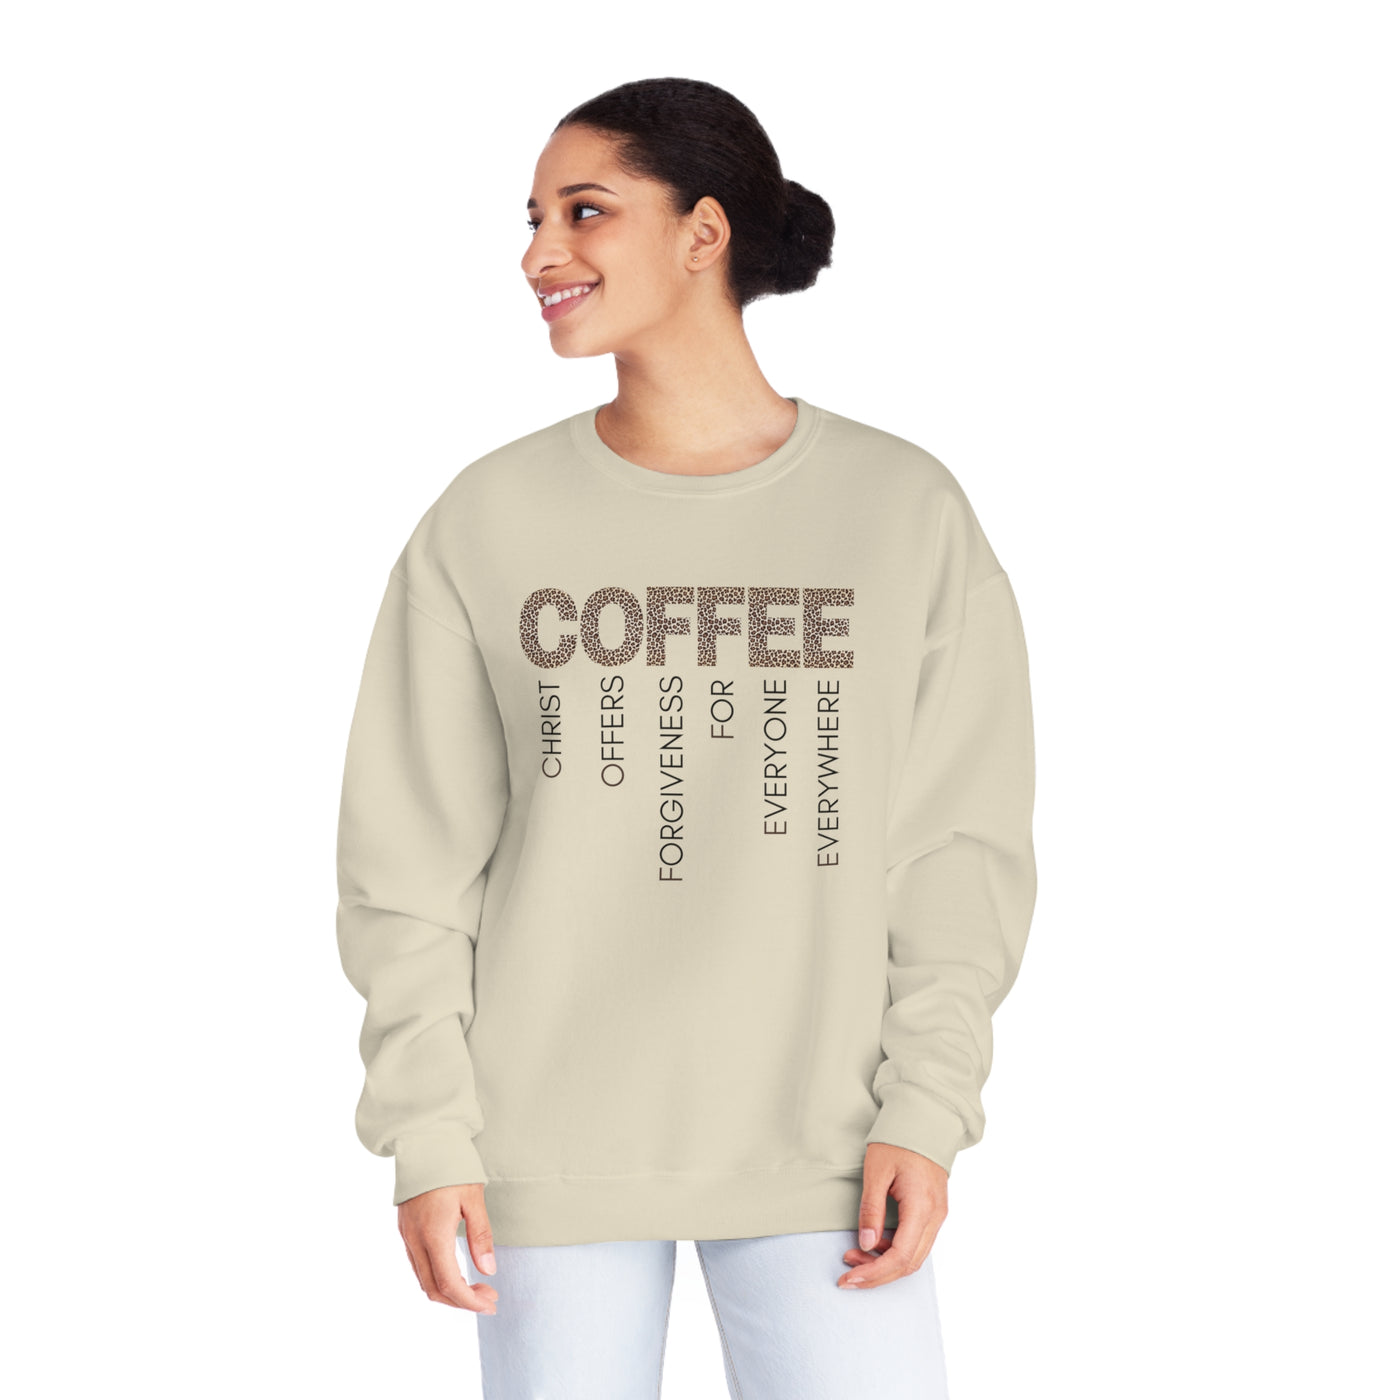 Coffee and Christ Sweatshirt